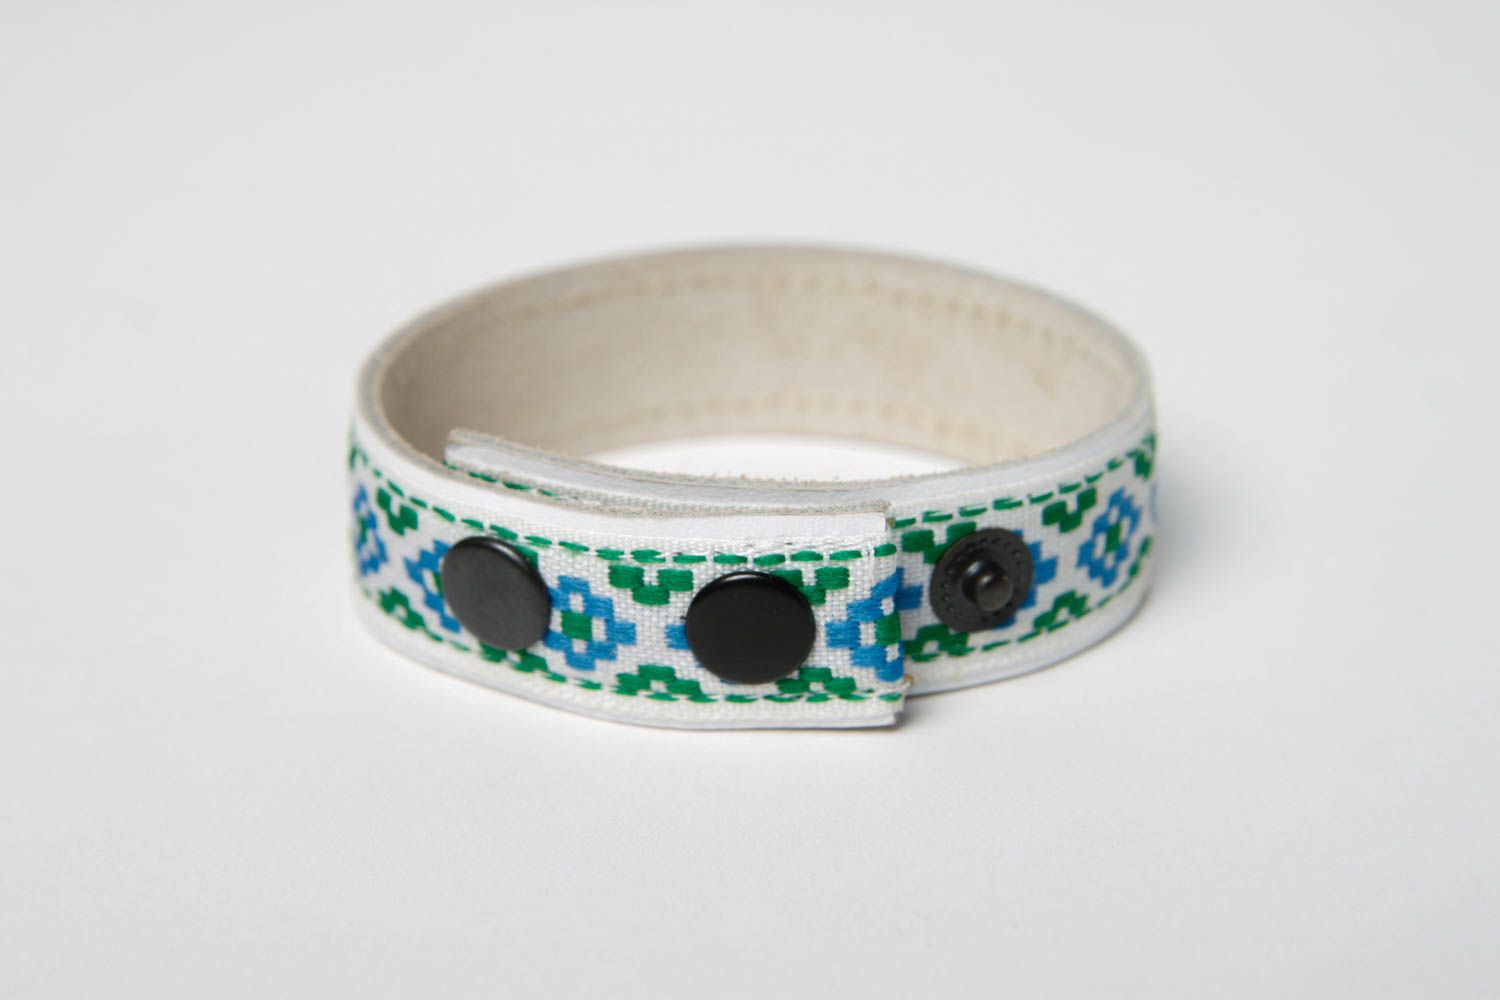 Unusual handmade leather bracelet fashion trends artisan jewelry designs photo 5